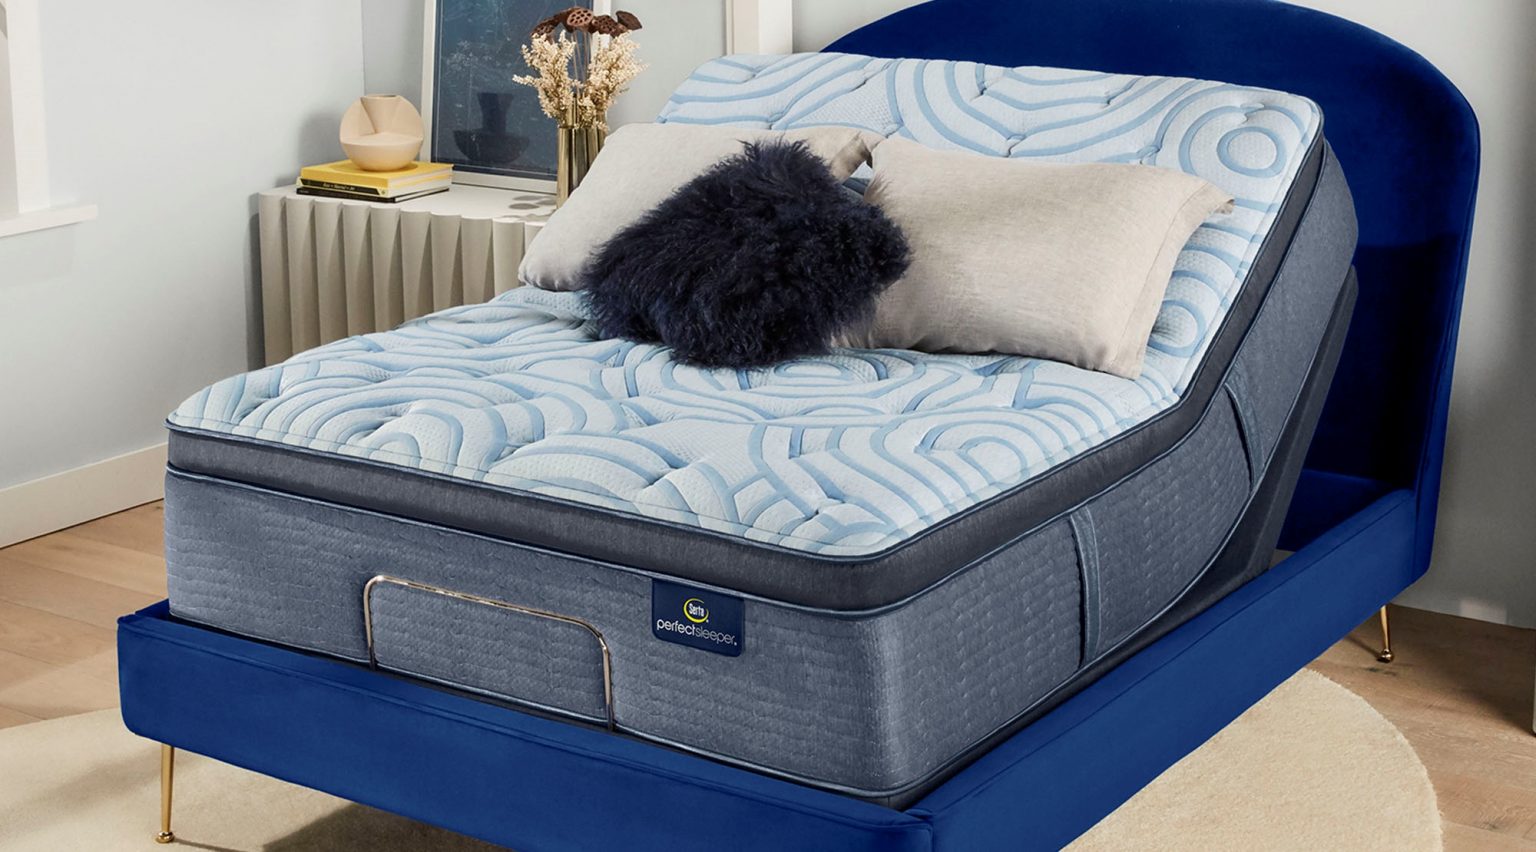 serta adjustable bed mattress firm